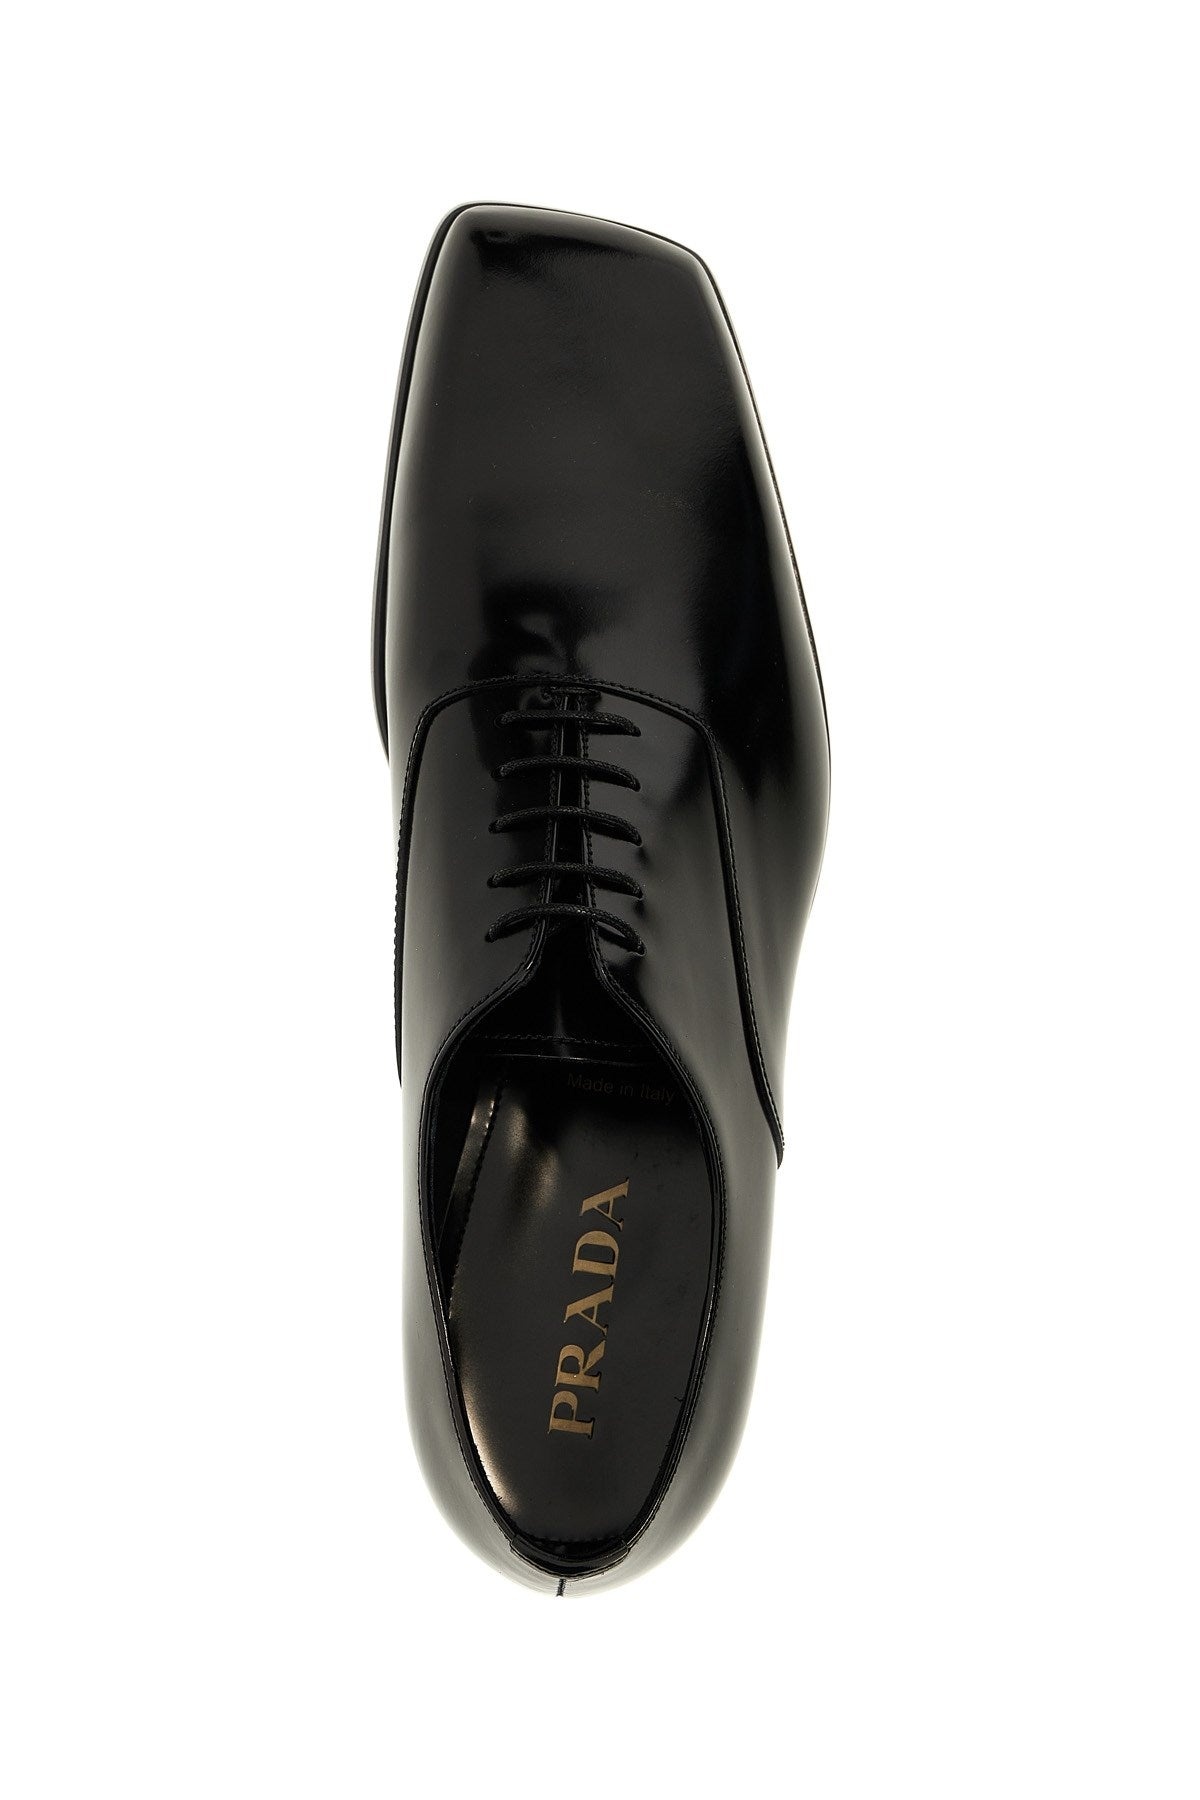 Prada Men 'Oxford' Lace Up Shoes - 3